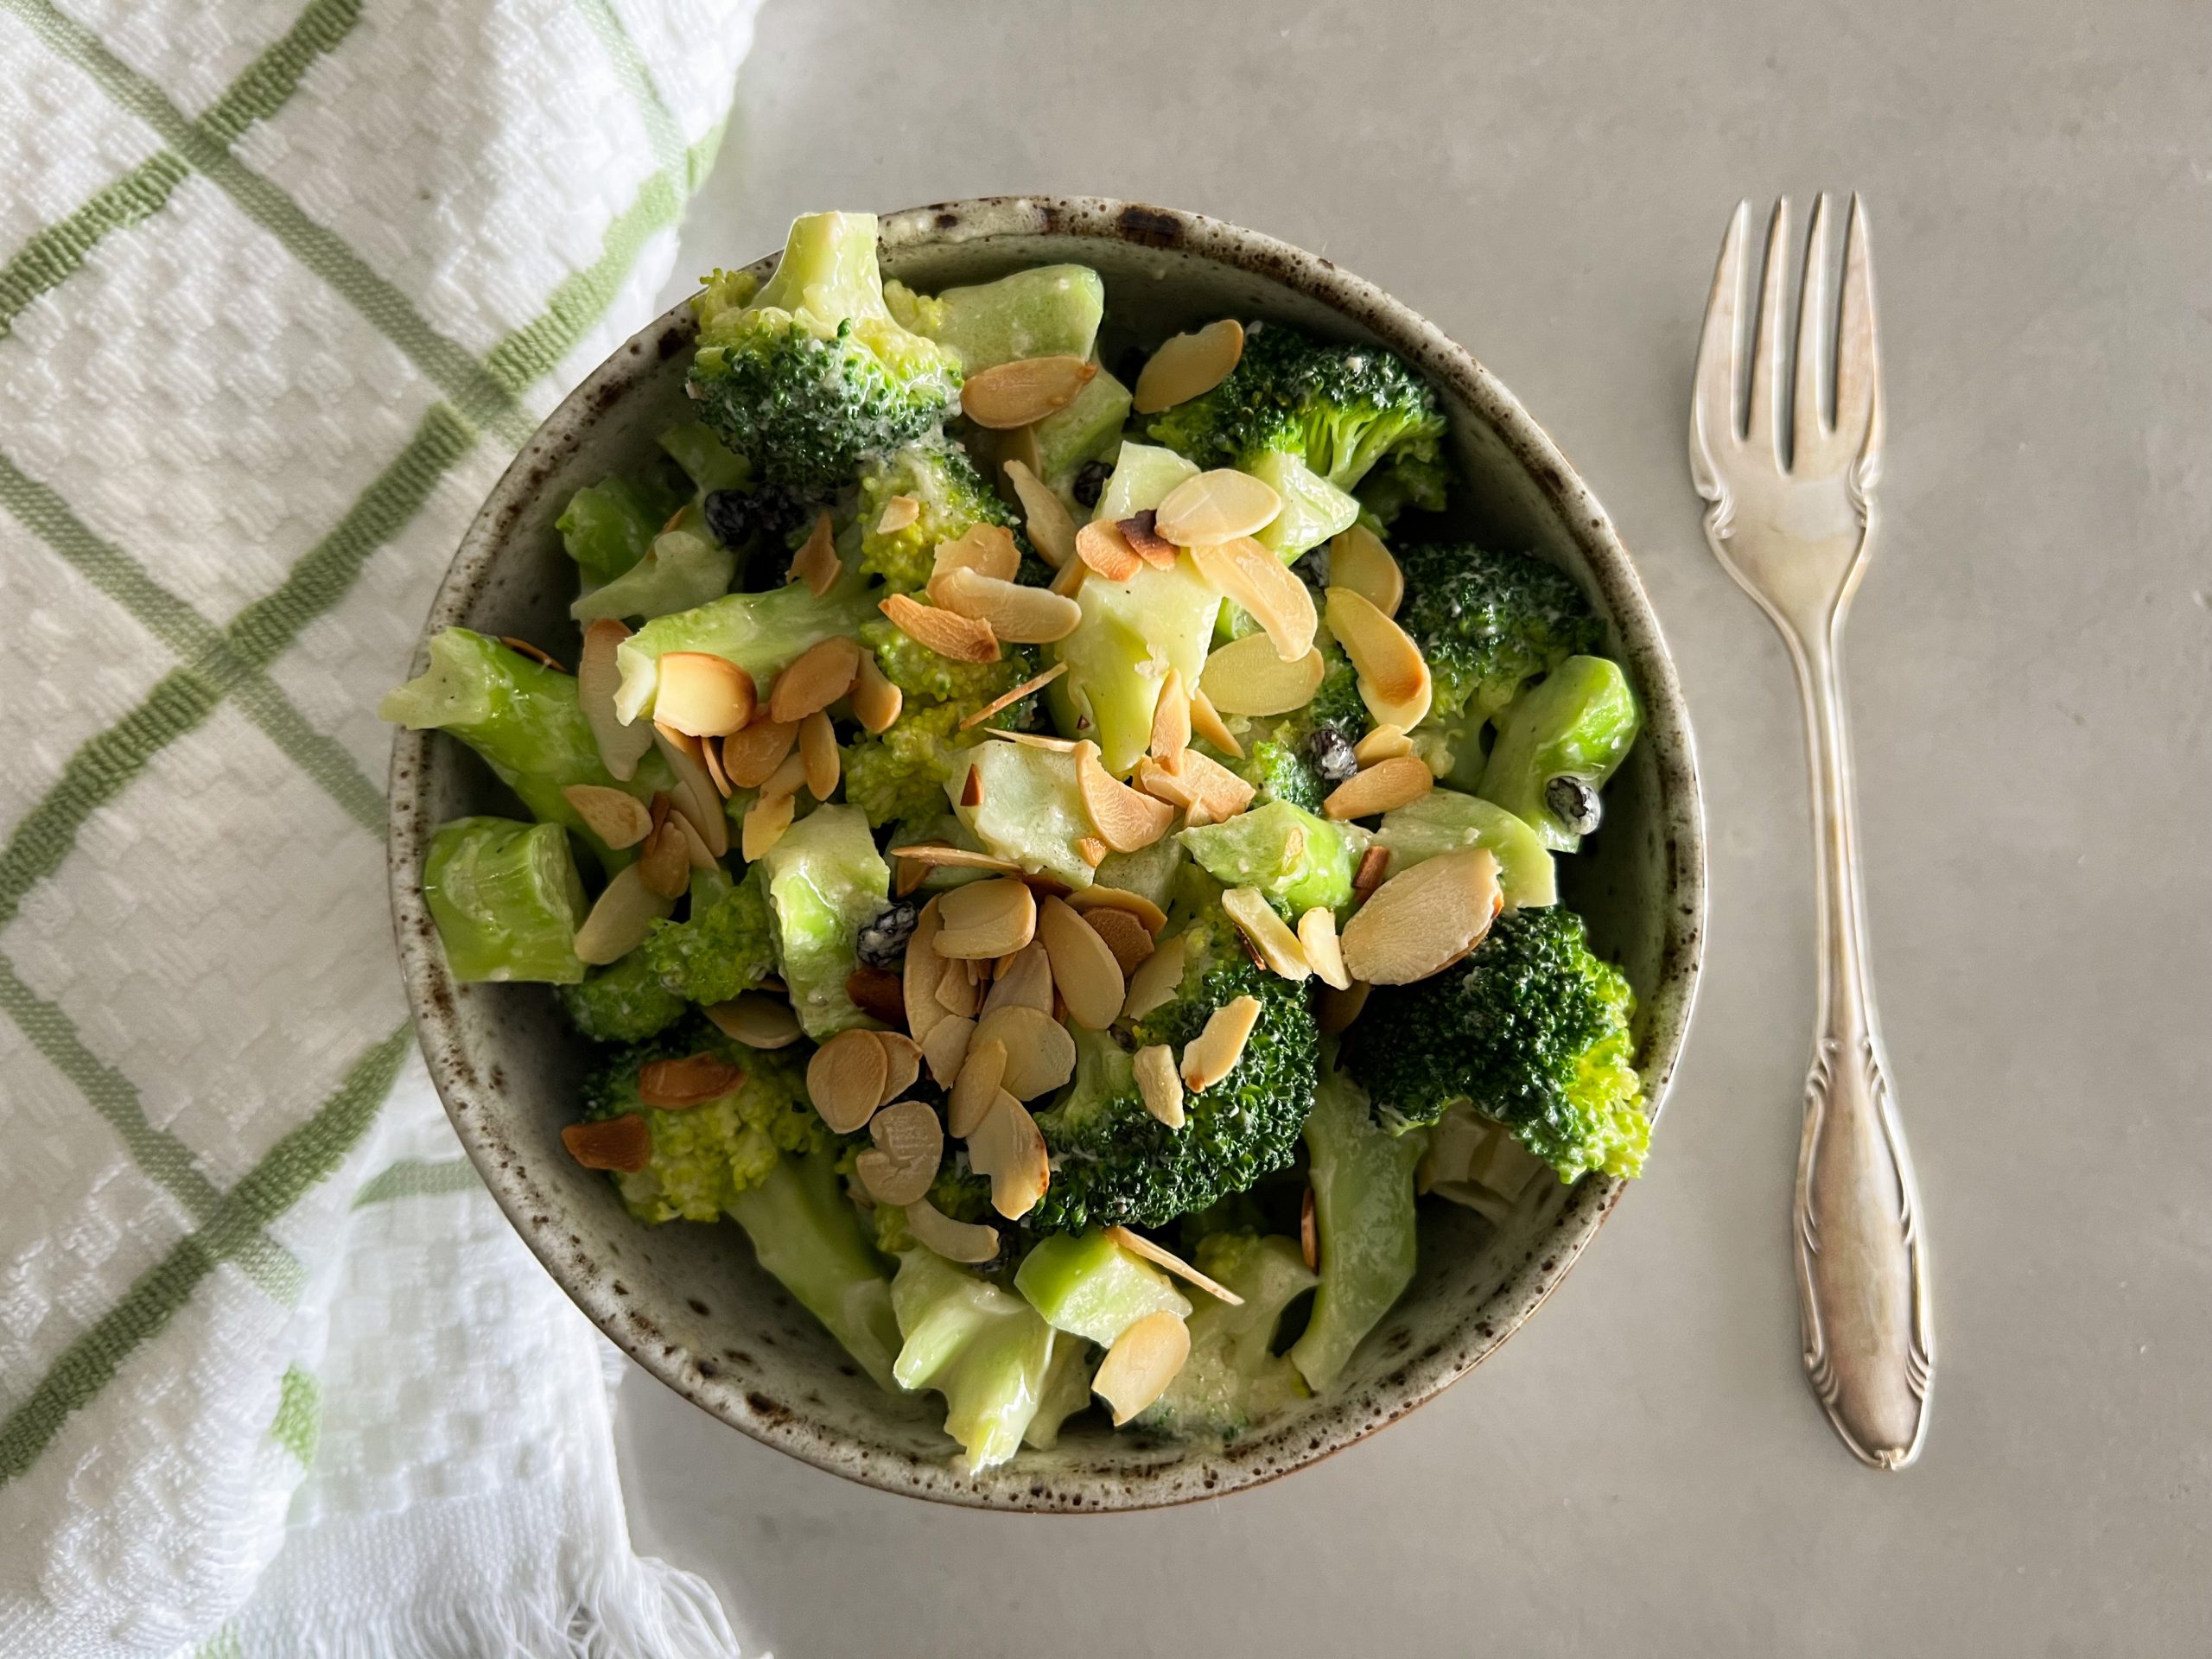 Warm Broccoli Salad with Greek Yogurt and Toasted Almonds